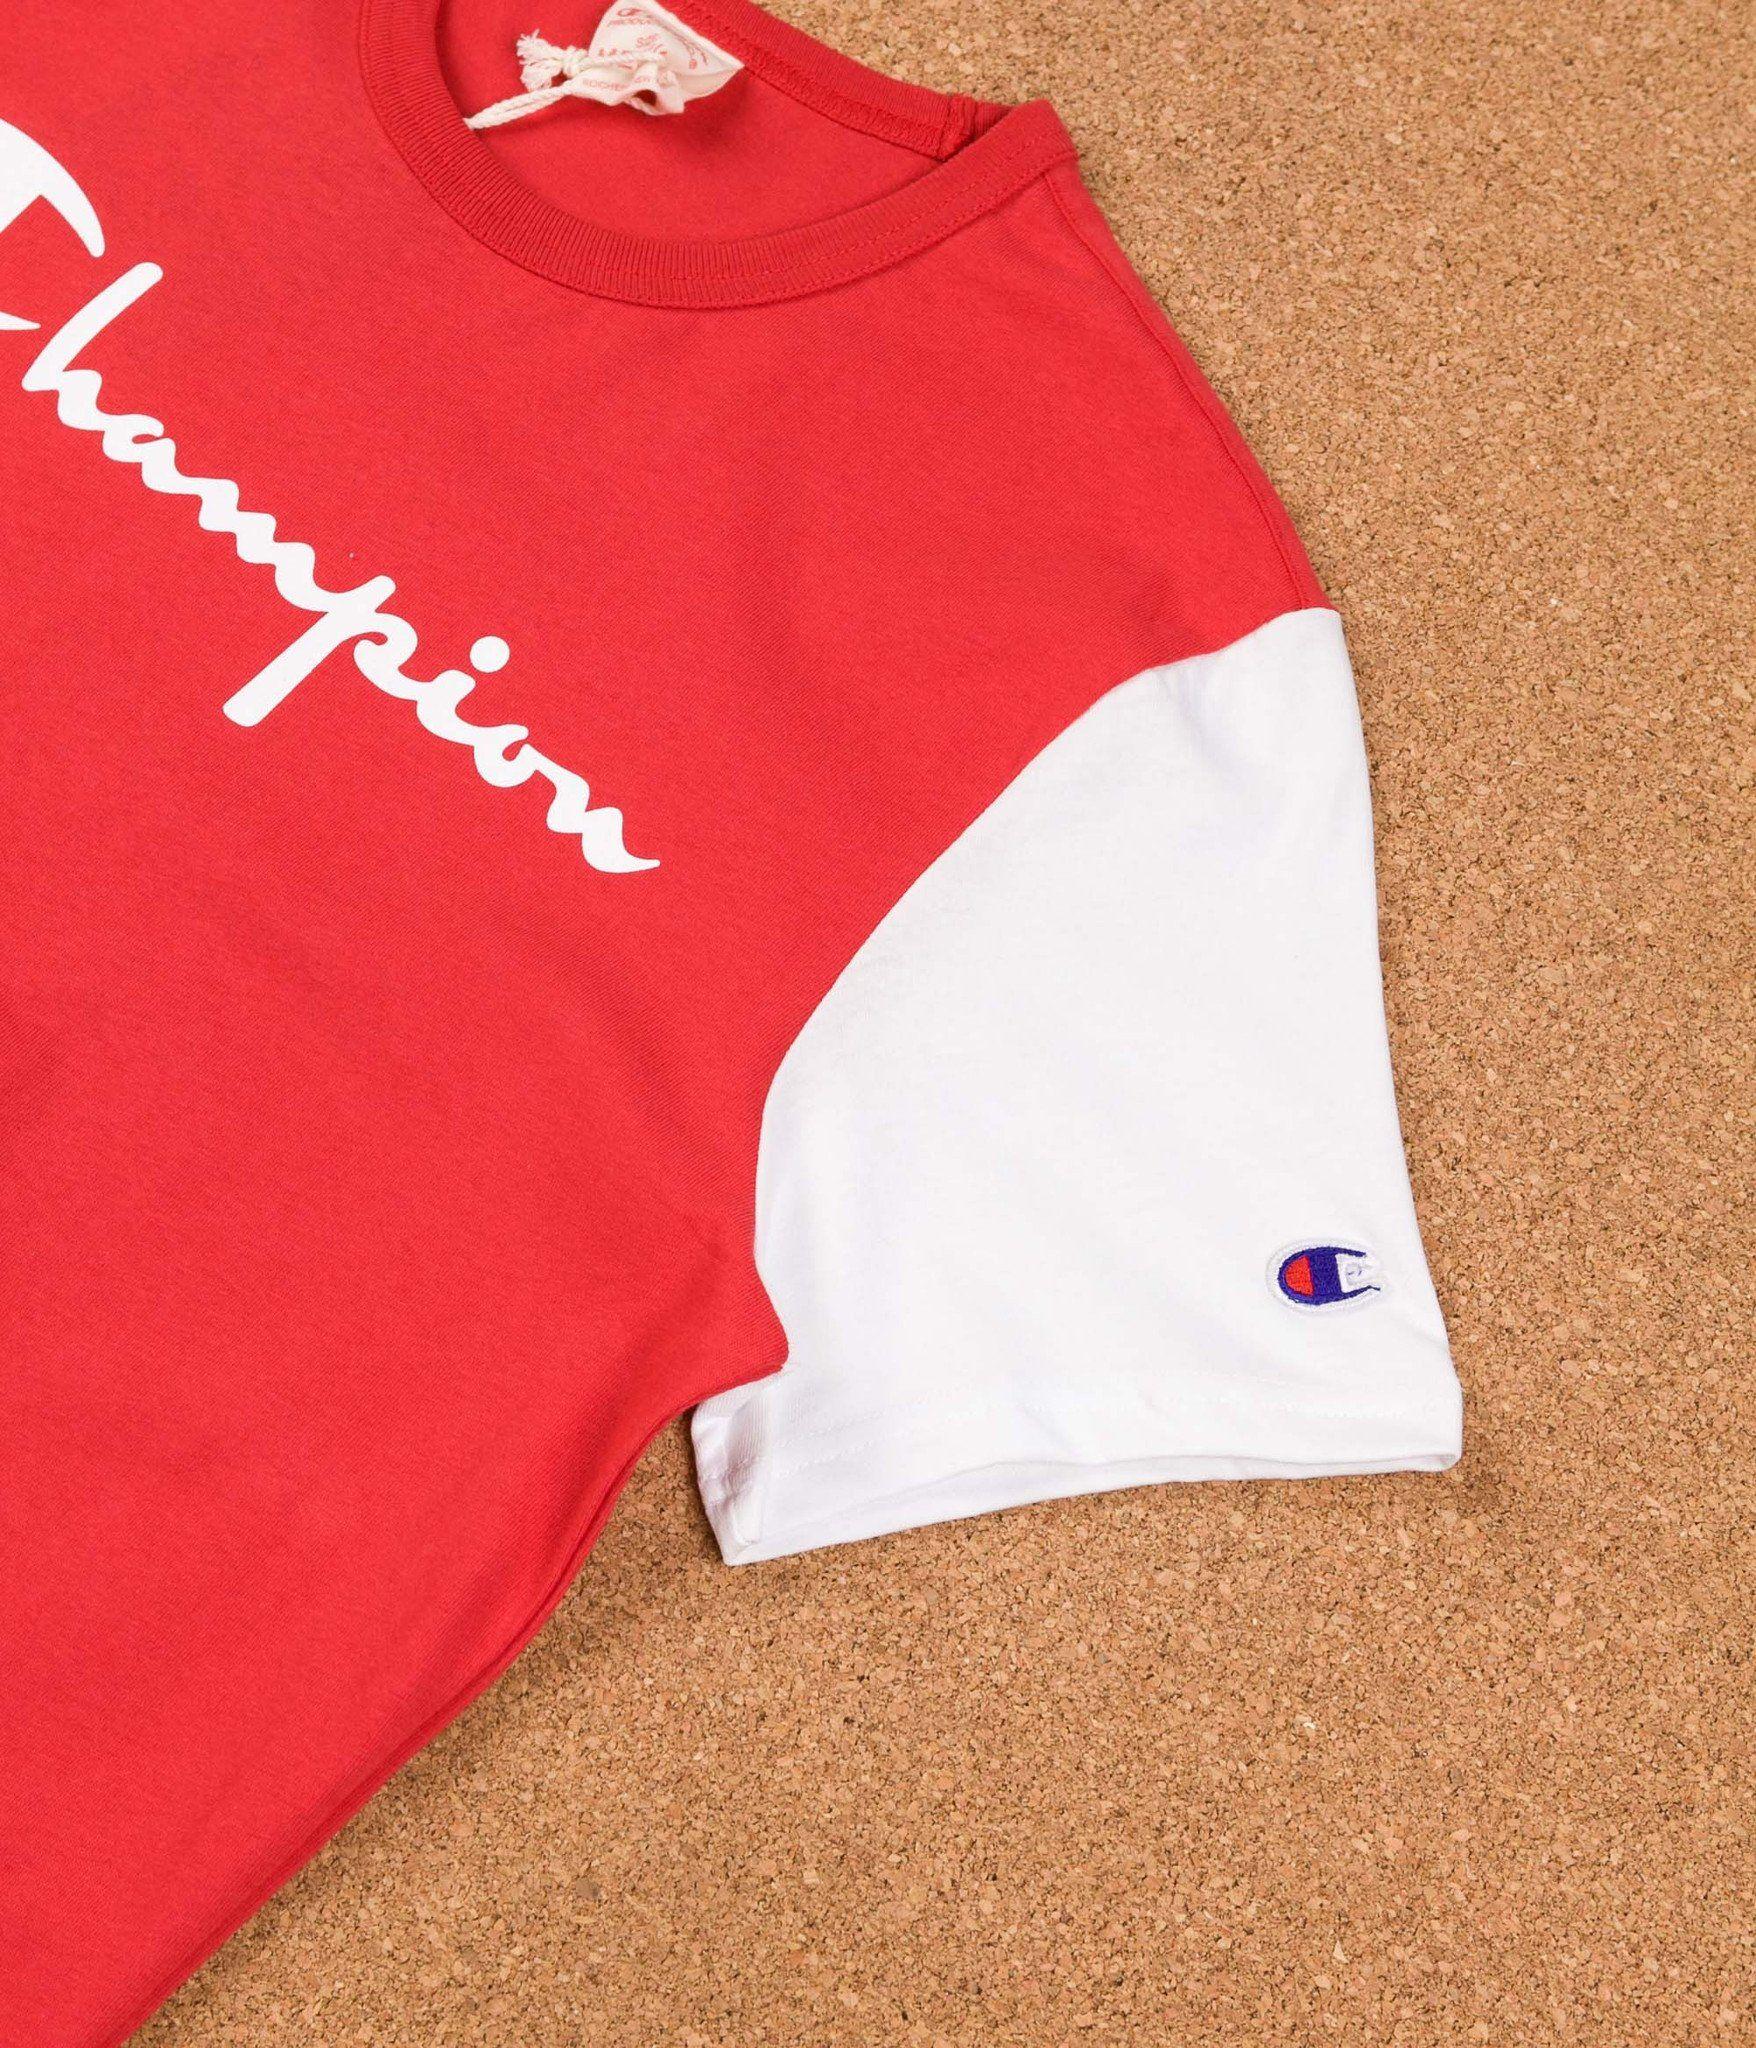 Red Reverse Logo - Champion Reverse Weave Tricolour Script Logo T-Shirt - Red / Navy ...